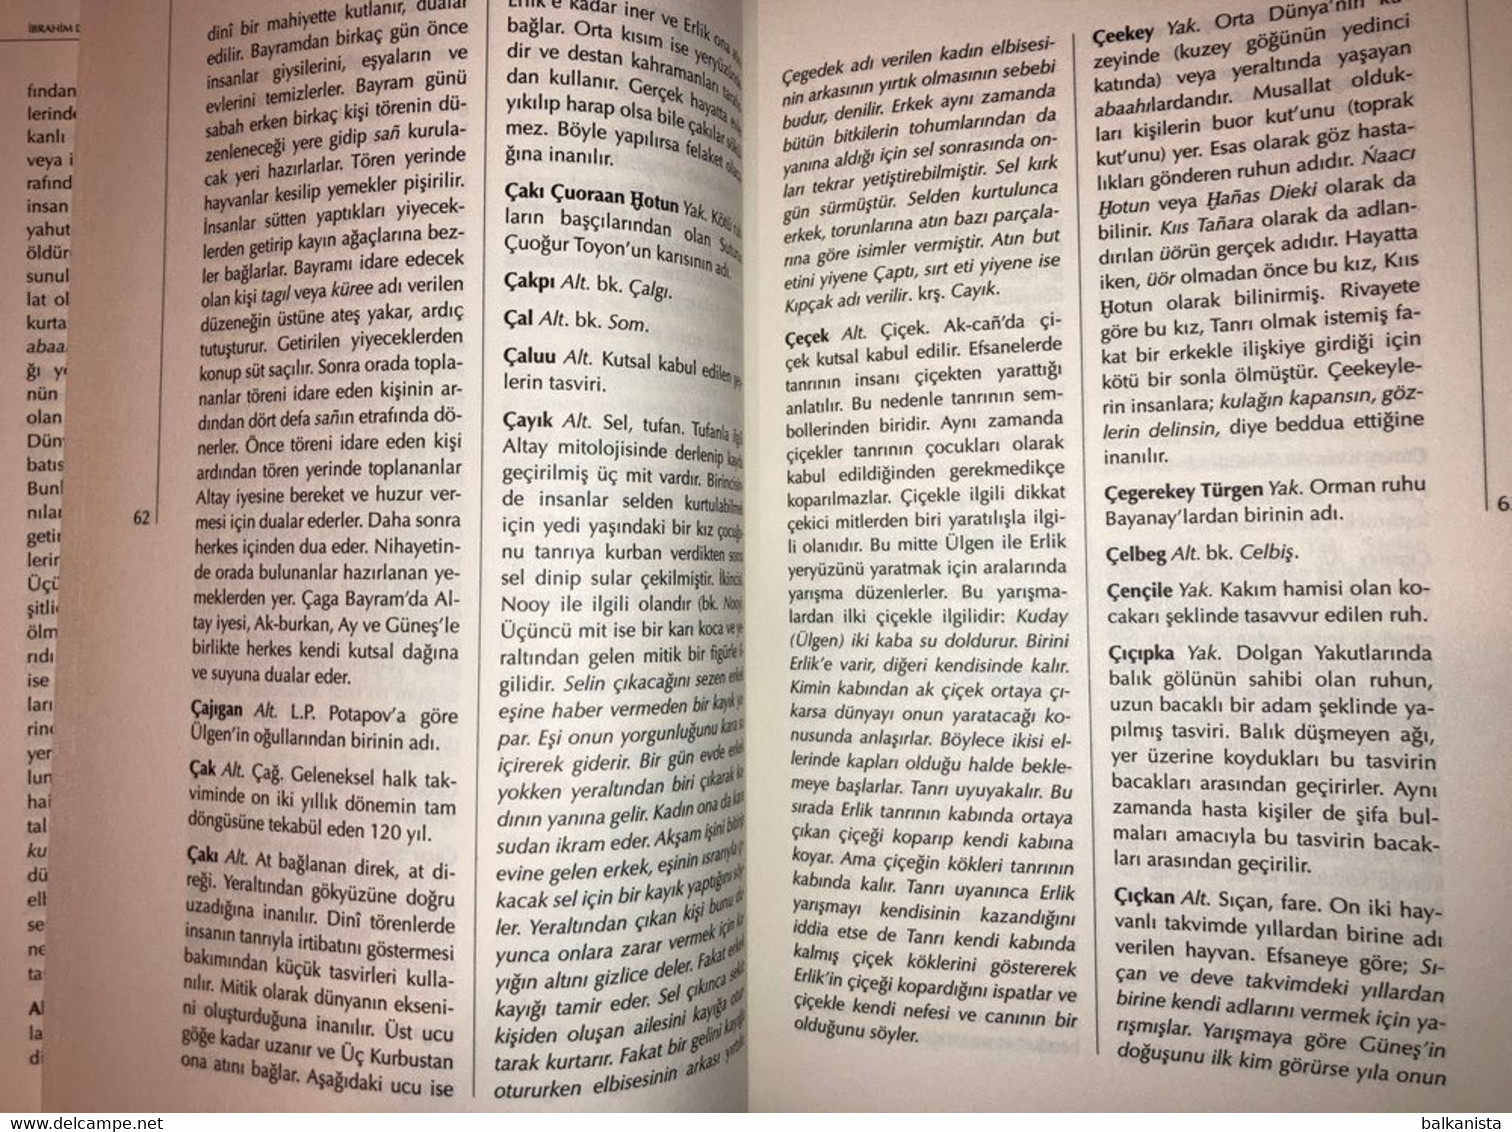 Turk Mitoloji Sozlugu - Turkish Turkic Mythology  Dictionary - Diccionarios